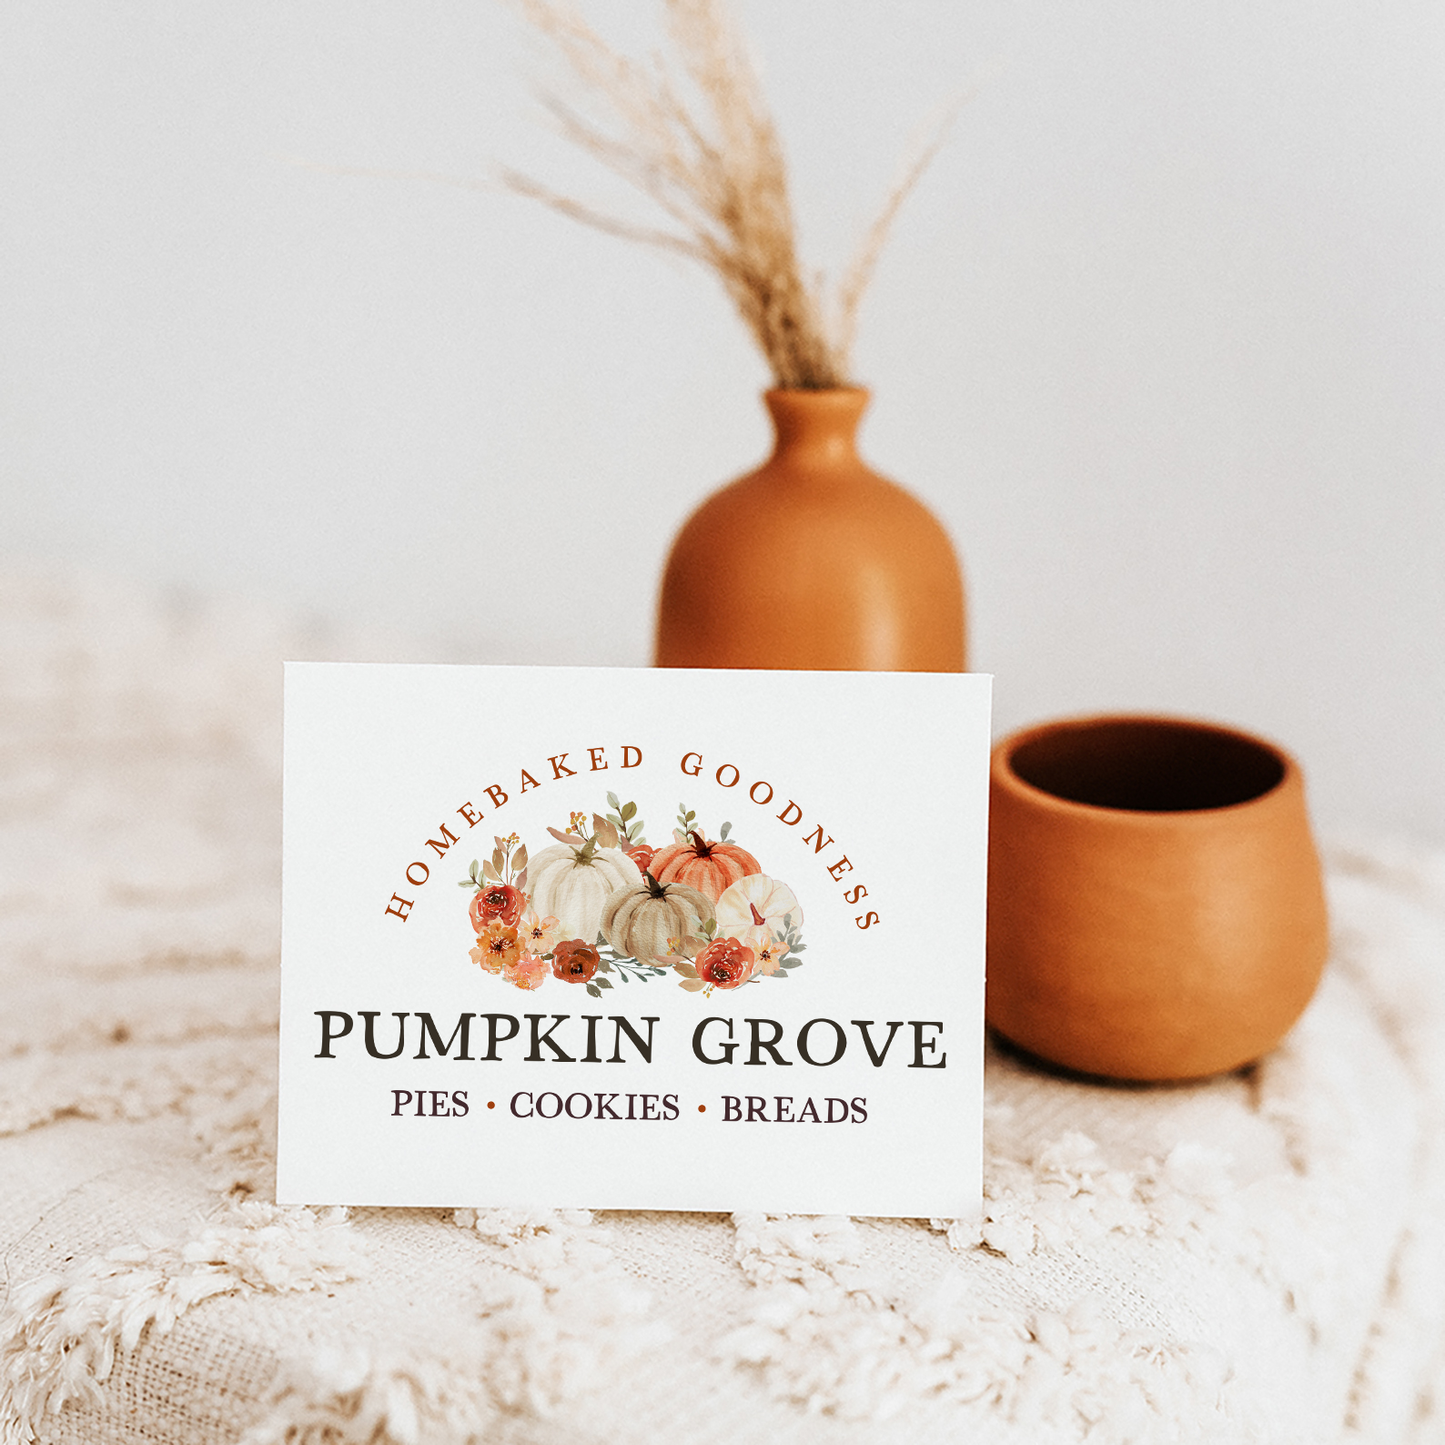 Pumpkin Grove | Premade Logo Design | Pumpkin, Autumn, Fall, Watercolor Floral, Farmhouse